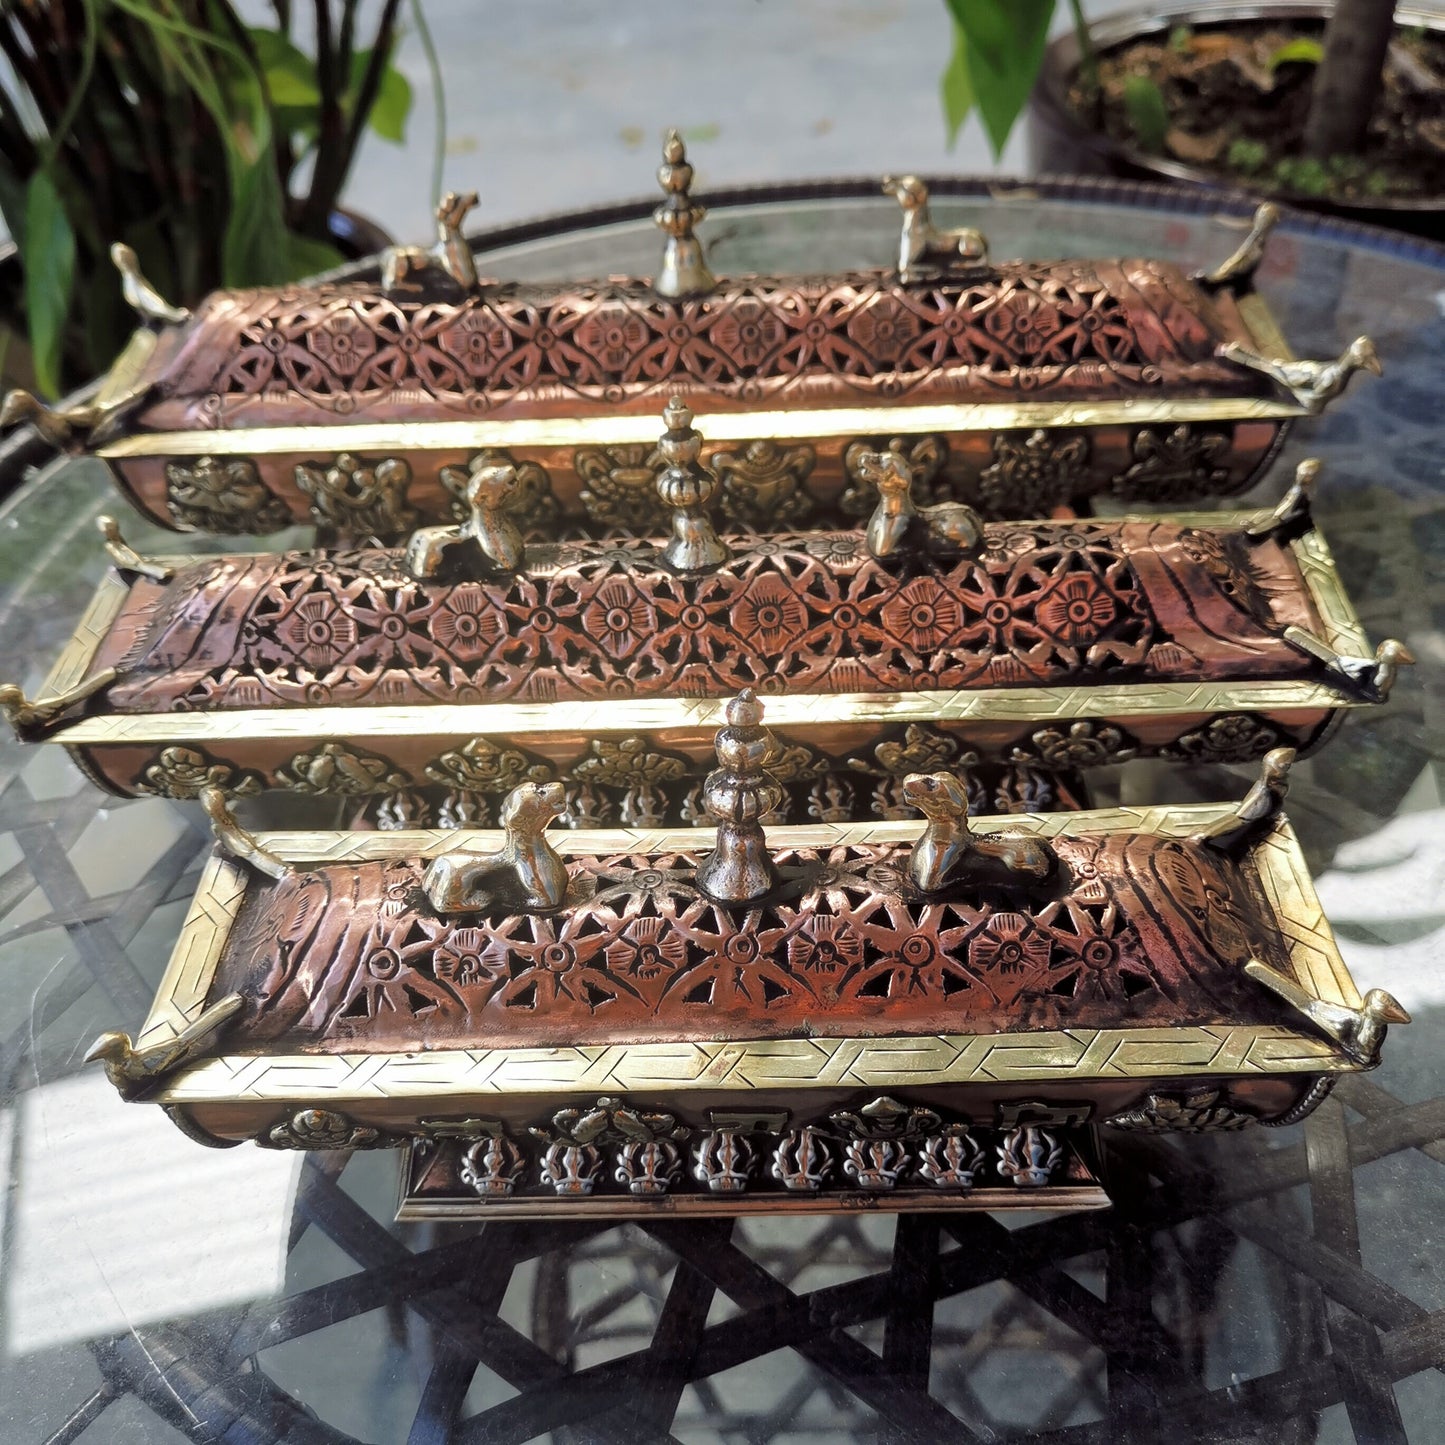 Gandhanra Vintage Copper Incense Burner Holder, Hollow Carved with Ashtamangala(Eight Auspicious),Incense Ash Catcher Box,Handmade in Nepal